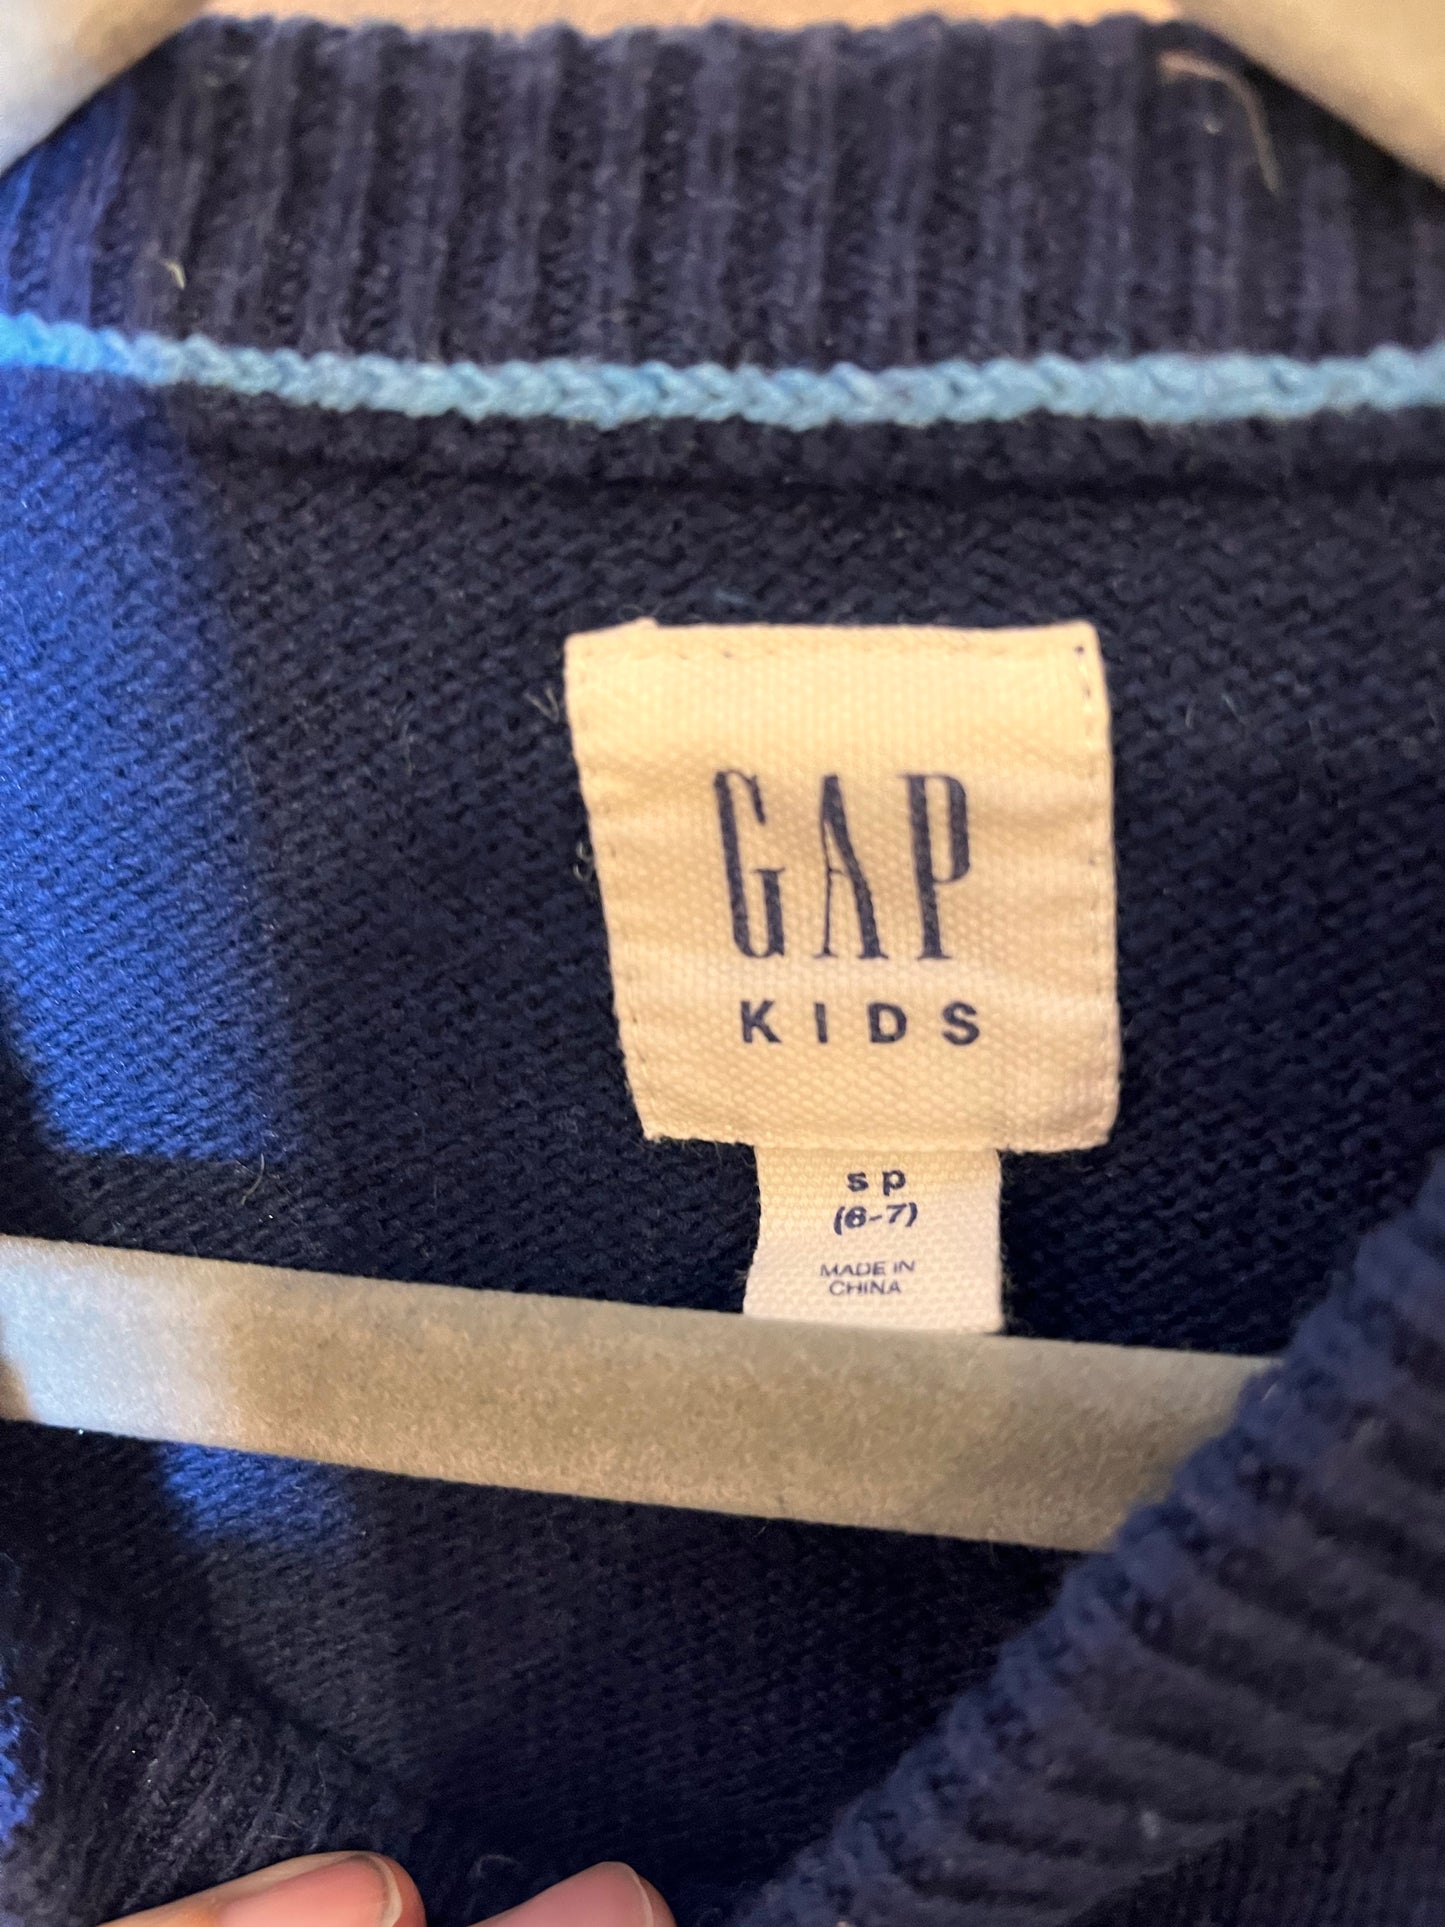 Gap Striped Knit Sweater (6-7)